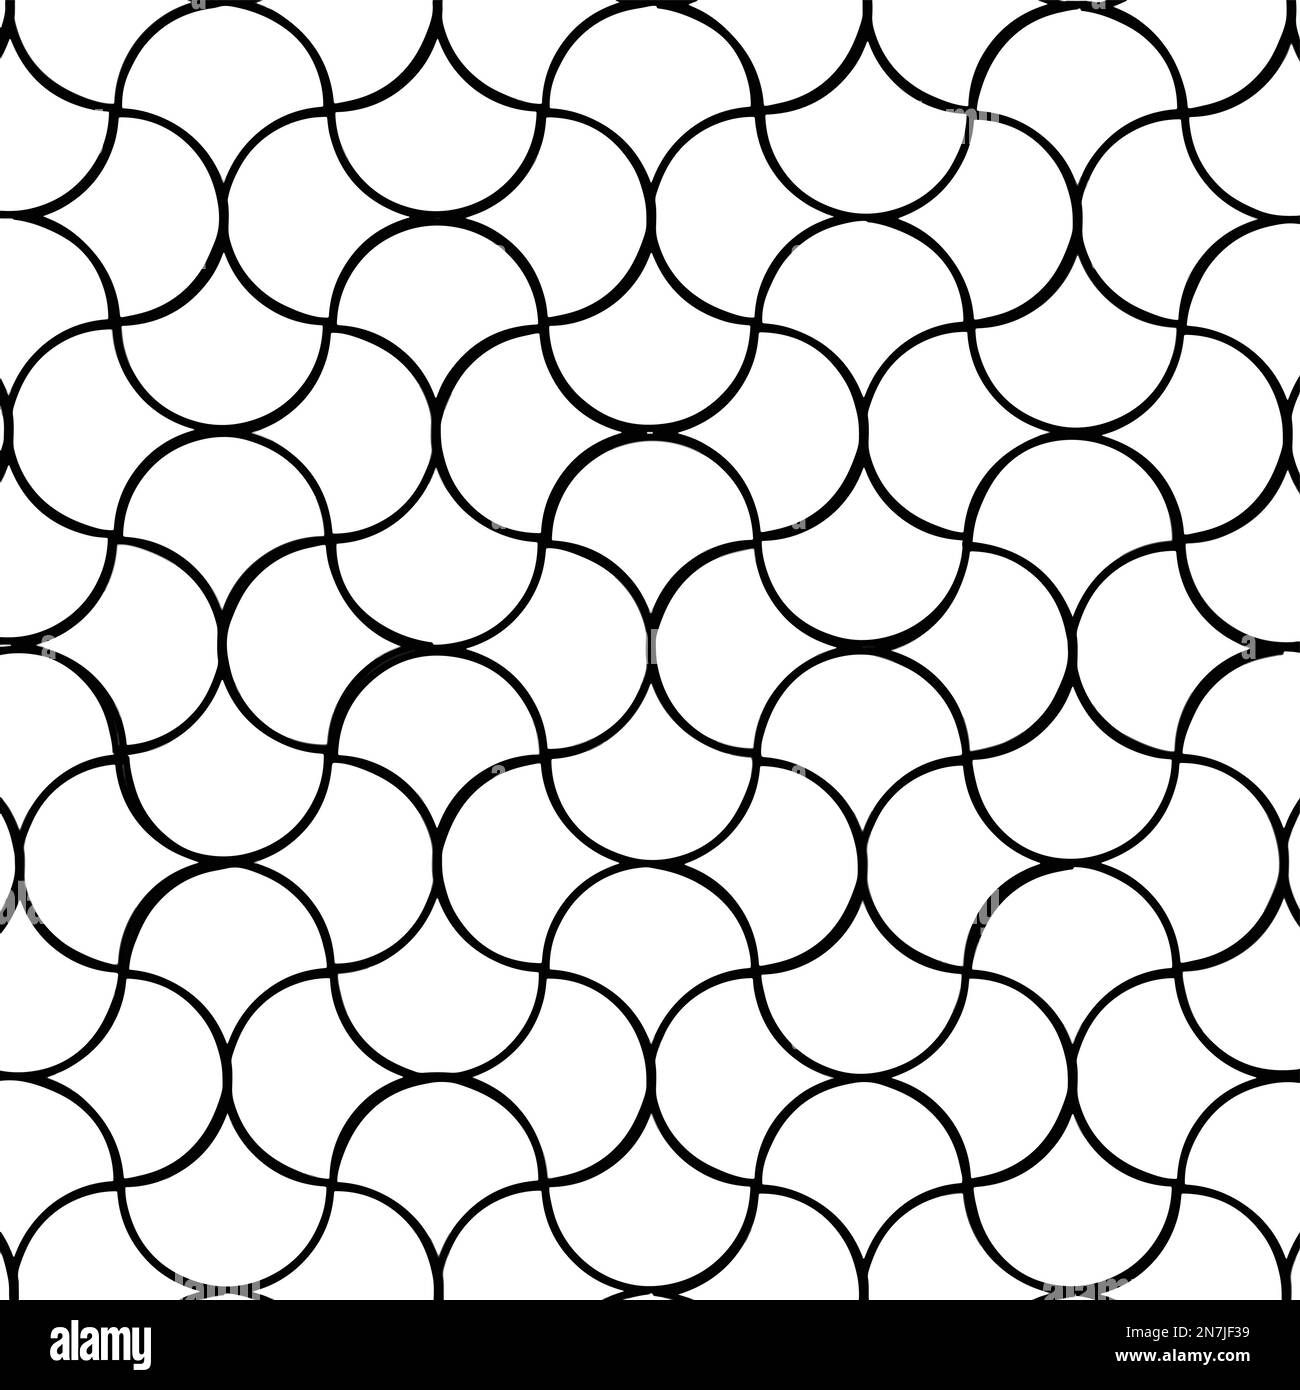 Vector illustration of an abstract geometric retro seamless pattern , monochrome geometric pattern illustration Stock Vector